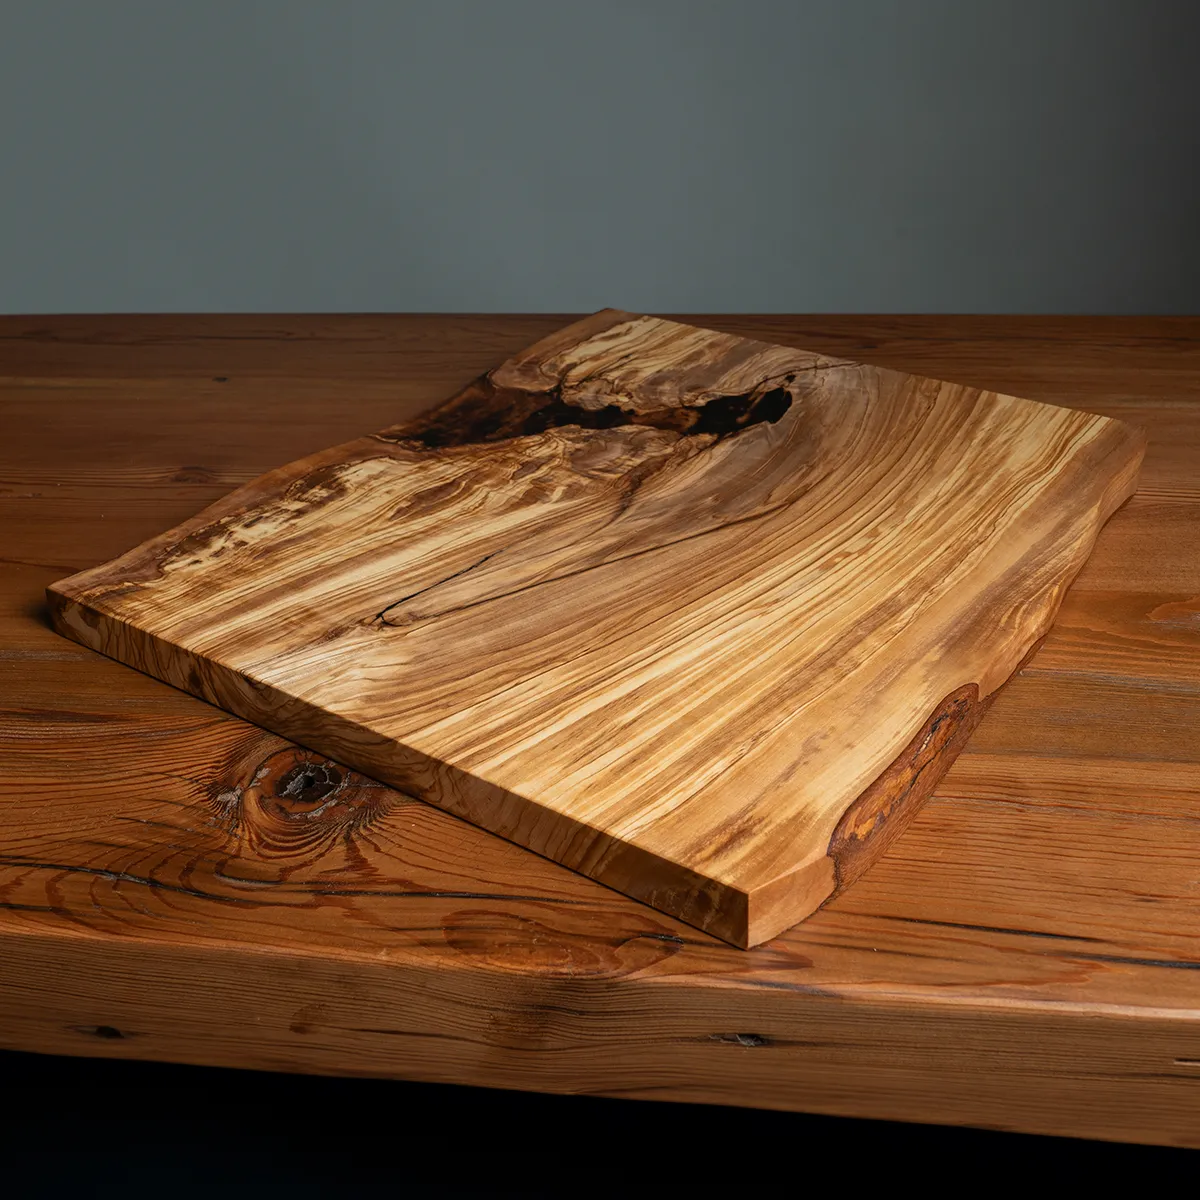 Olive wood charcuterie board